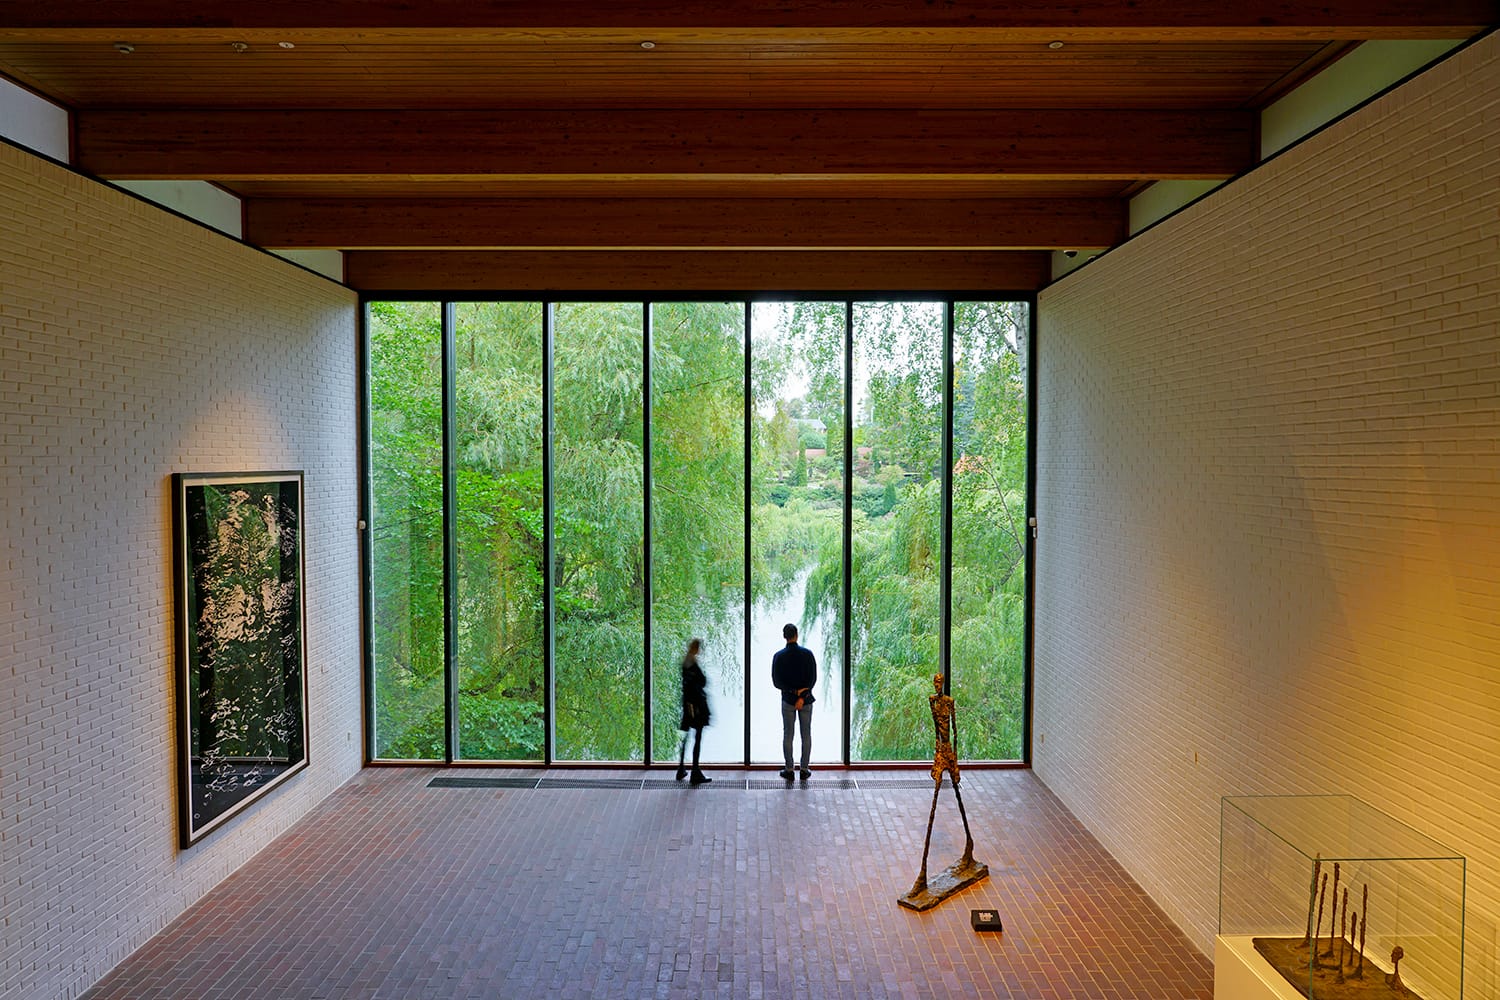 Louisiana Museum of Modern Art in Helsingor (Elsinore), Denmark